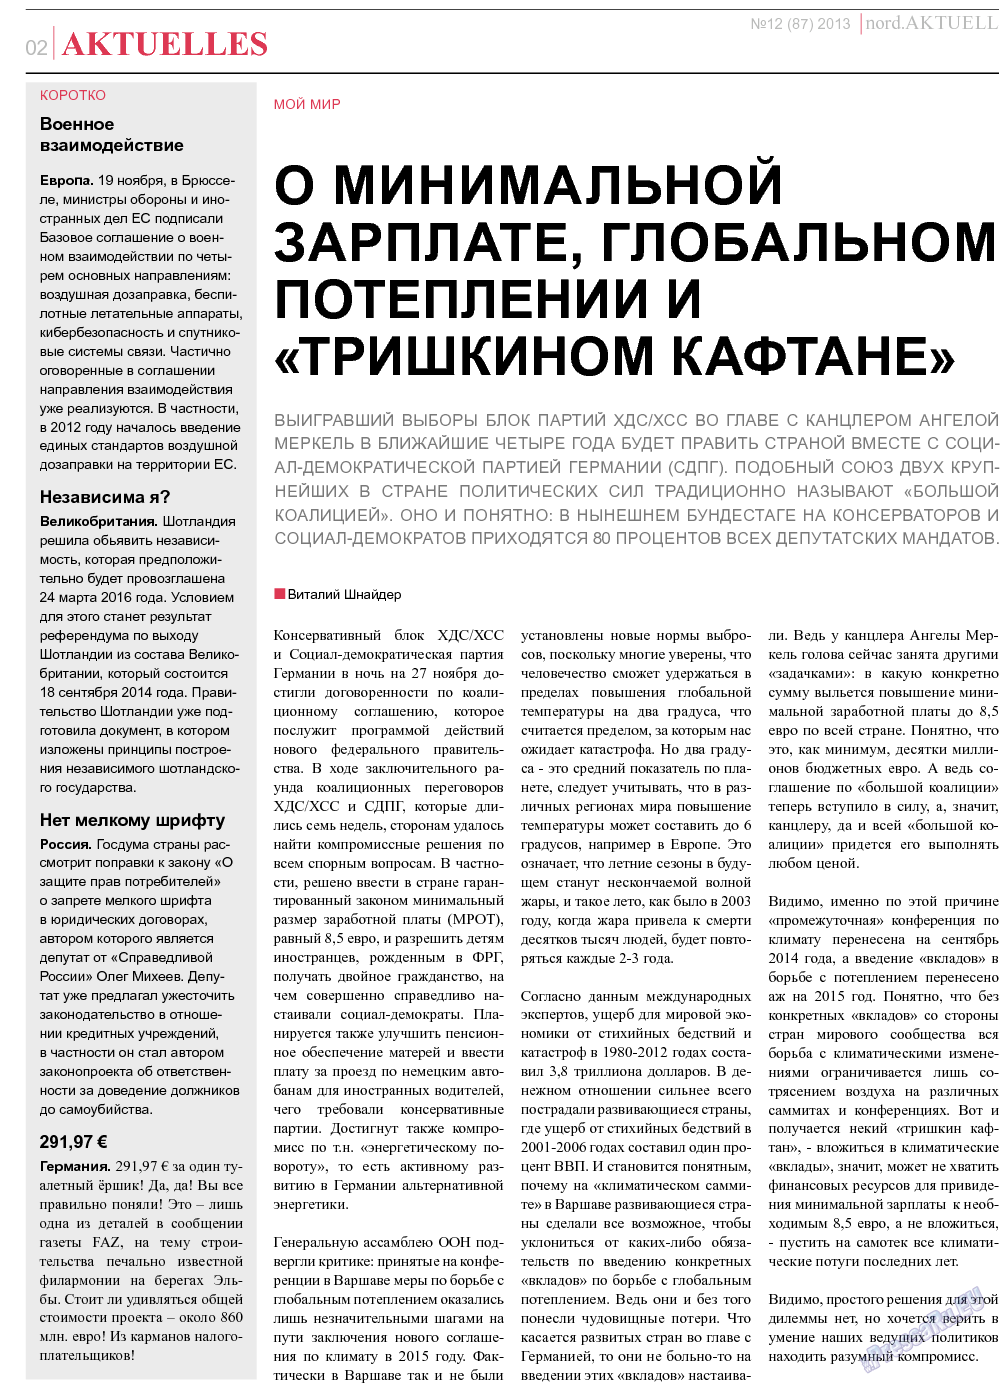 nord.Aktuell (газета). 2013 год, номер 12, стр. 2